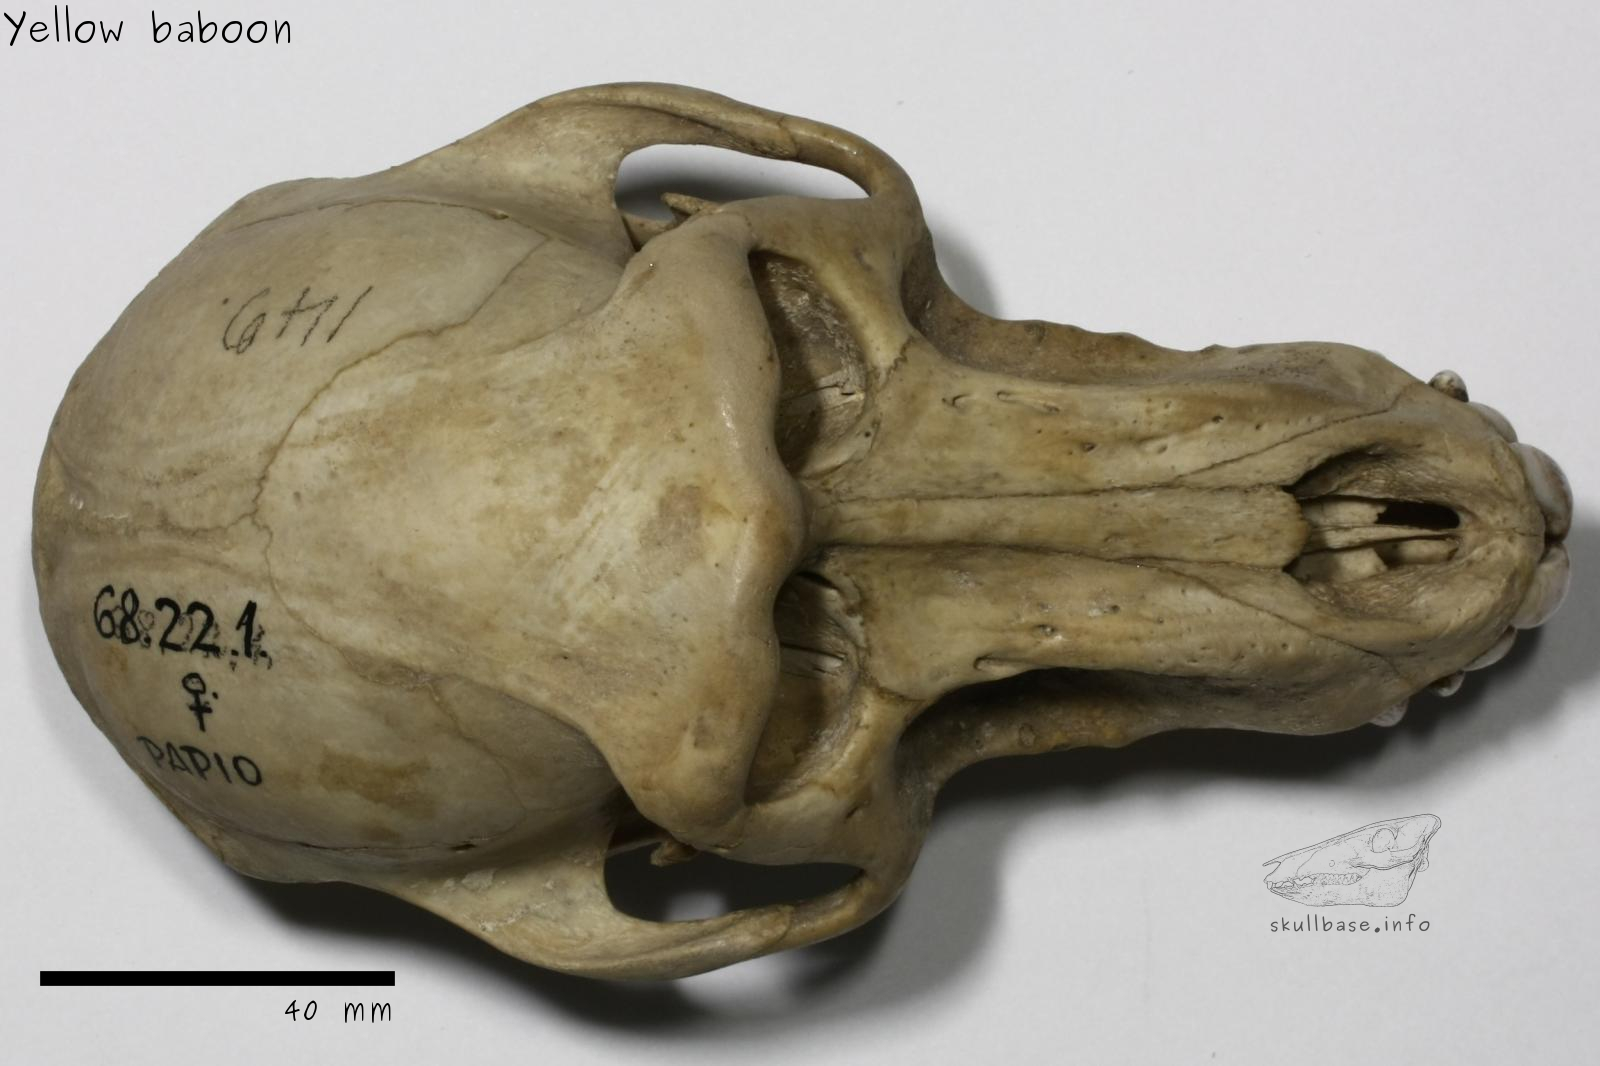 Yellow baboon (Papio cynocephalus cynocephalus) skull dorsal view